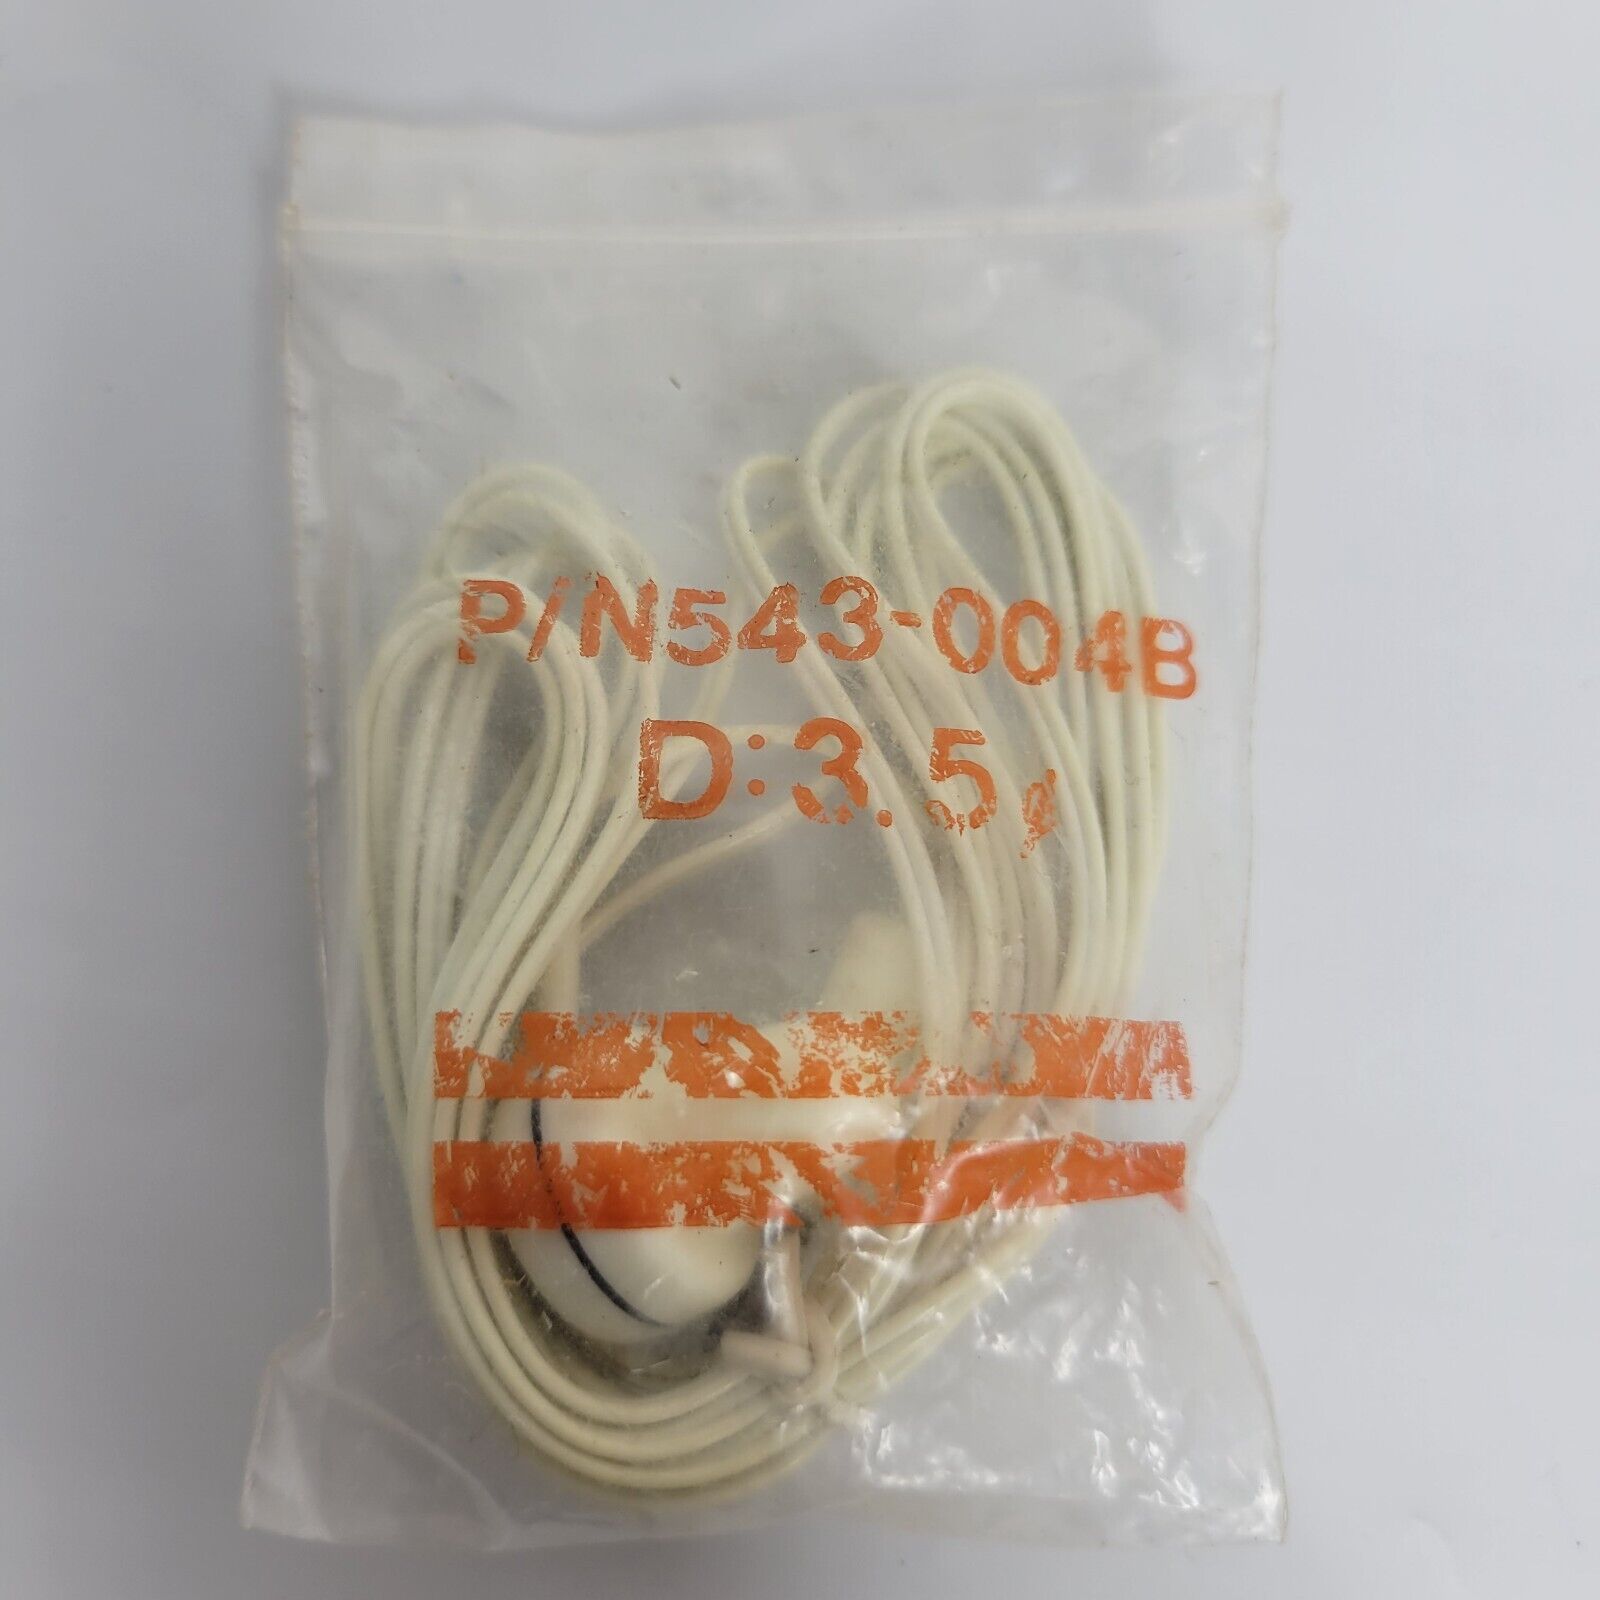 Mono earphone for a 1970\'s transistor radio.  p/n 543-004b 3.5 